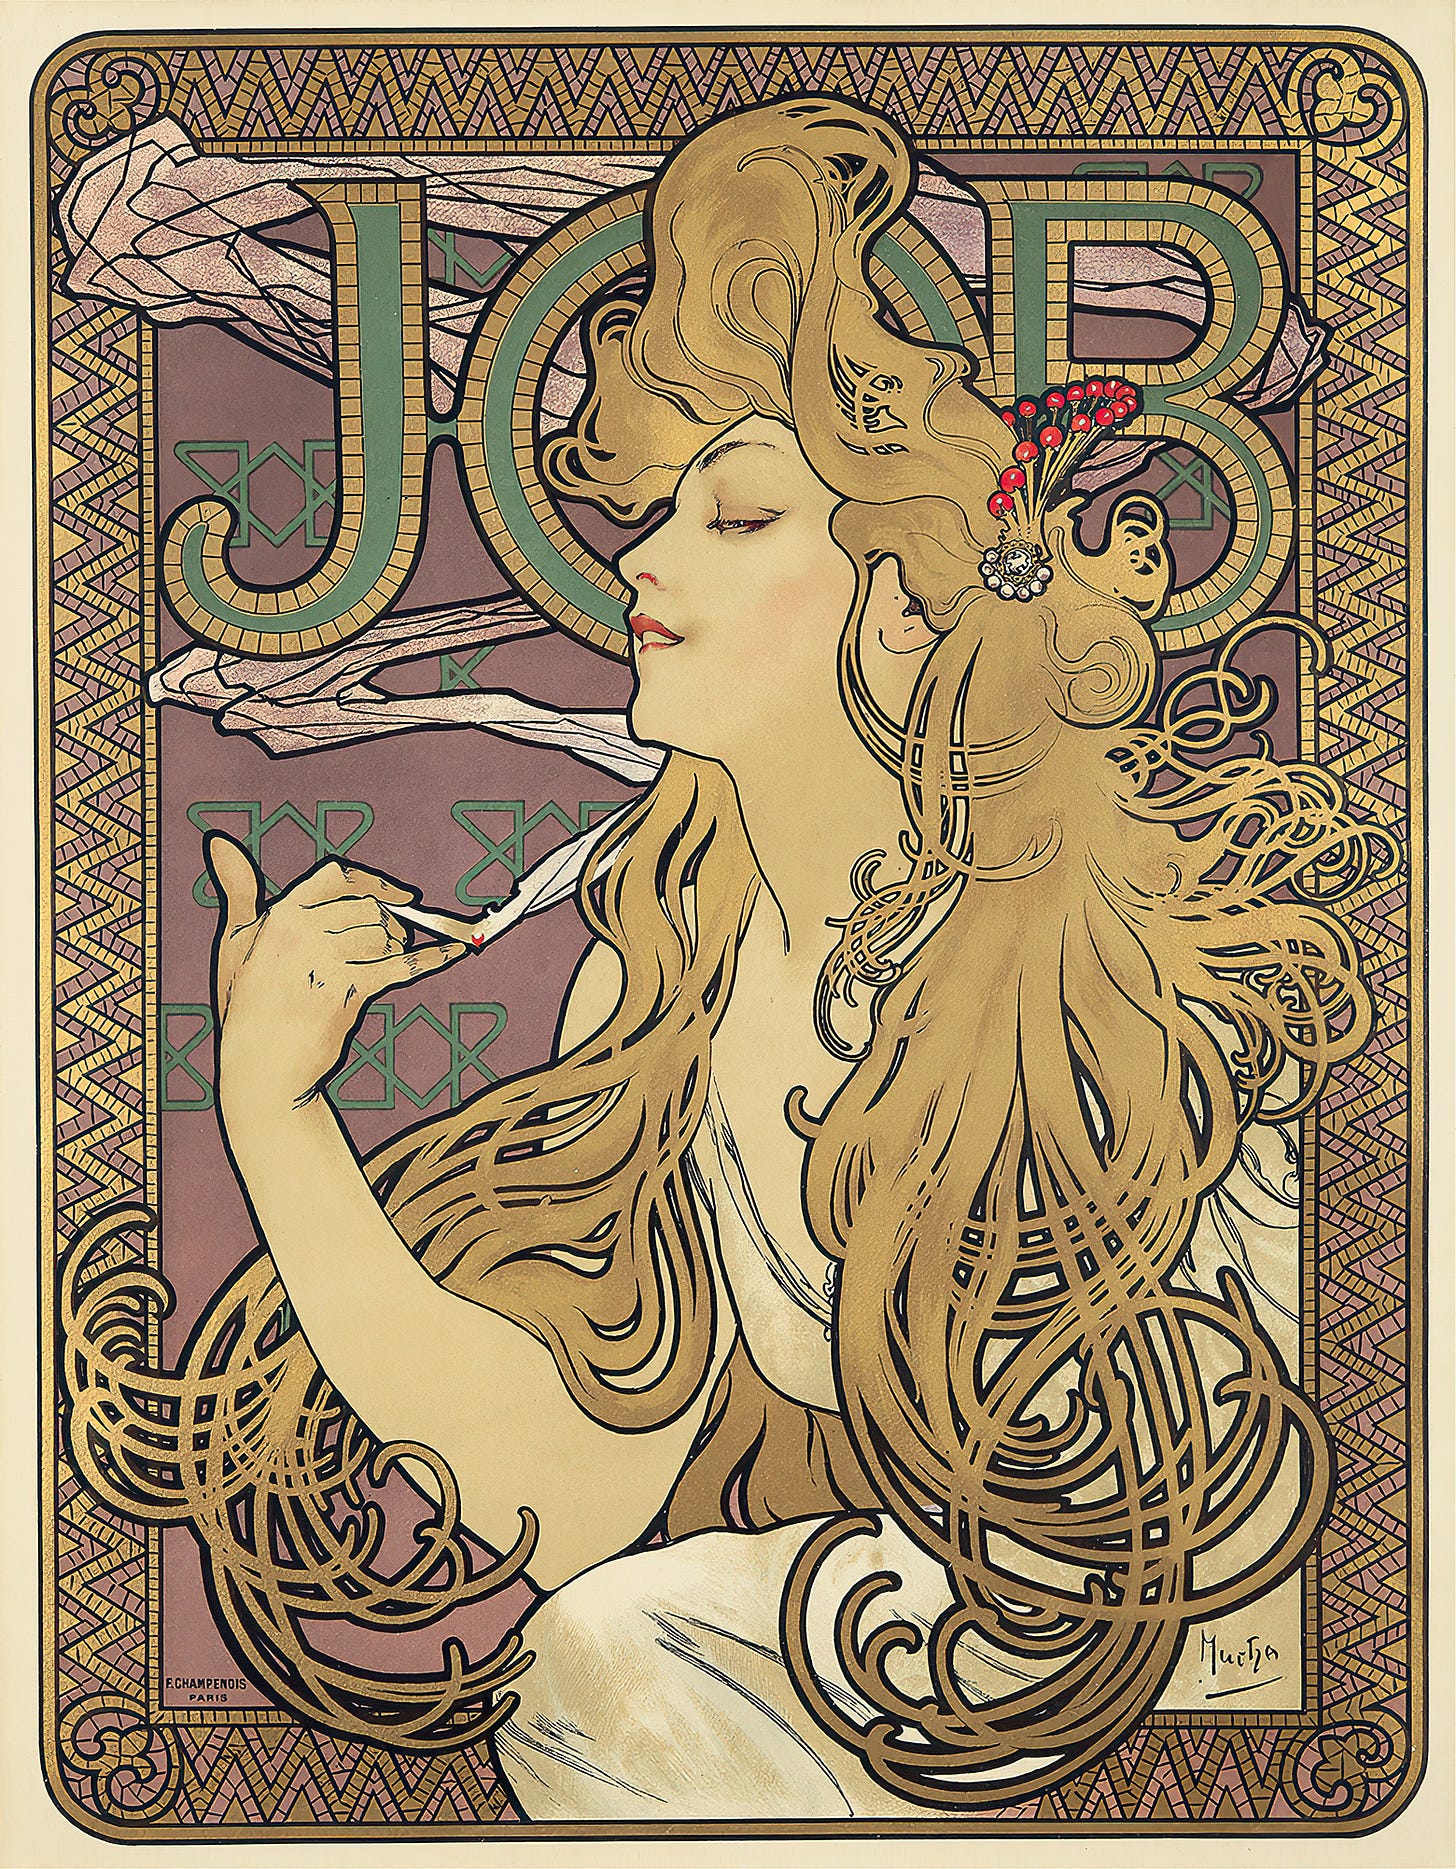 Job (1896) by Alphonse Mucha